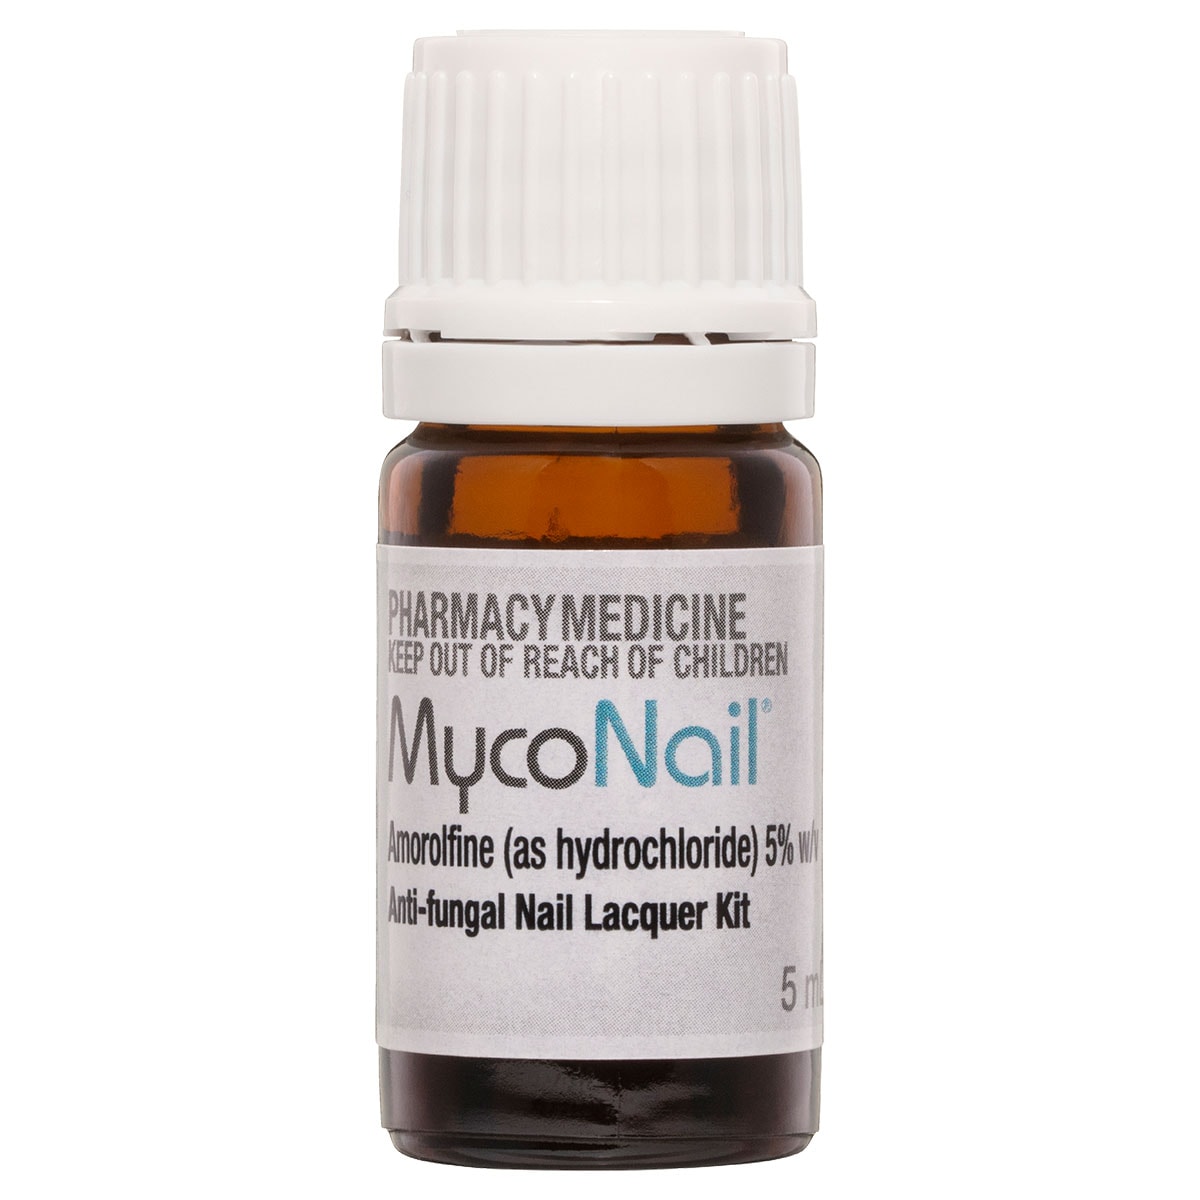 MycoNail Anti-fungal Nail Lacquer Kit 5ml